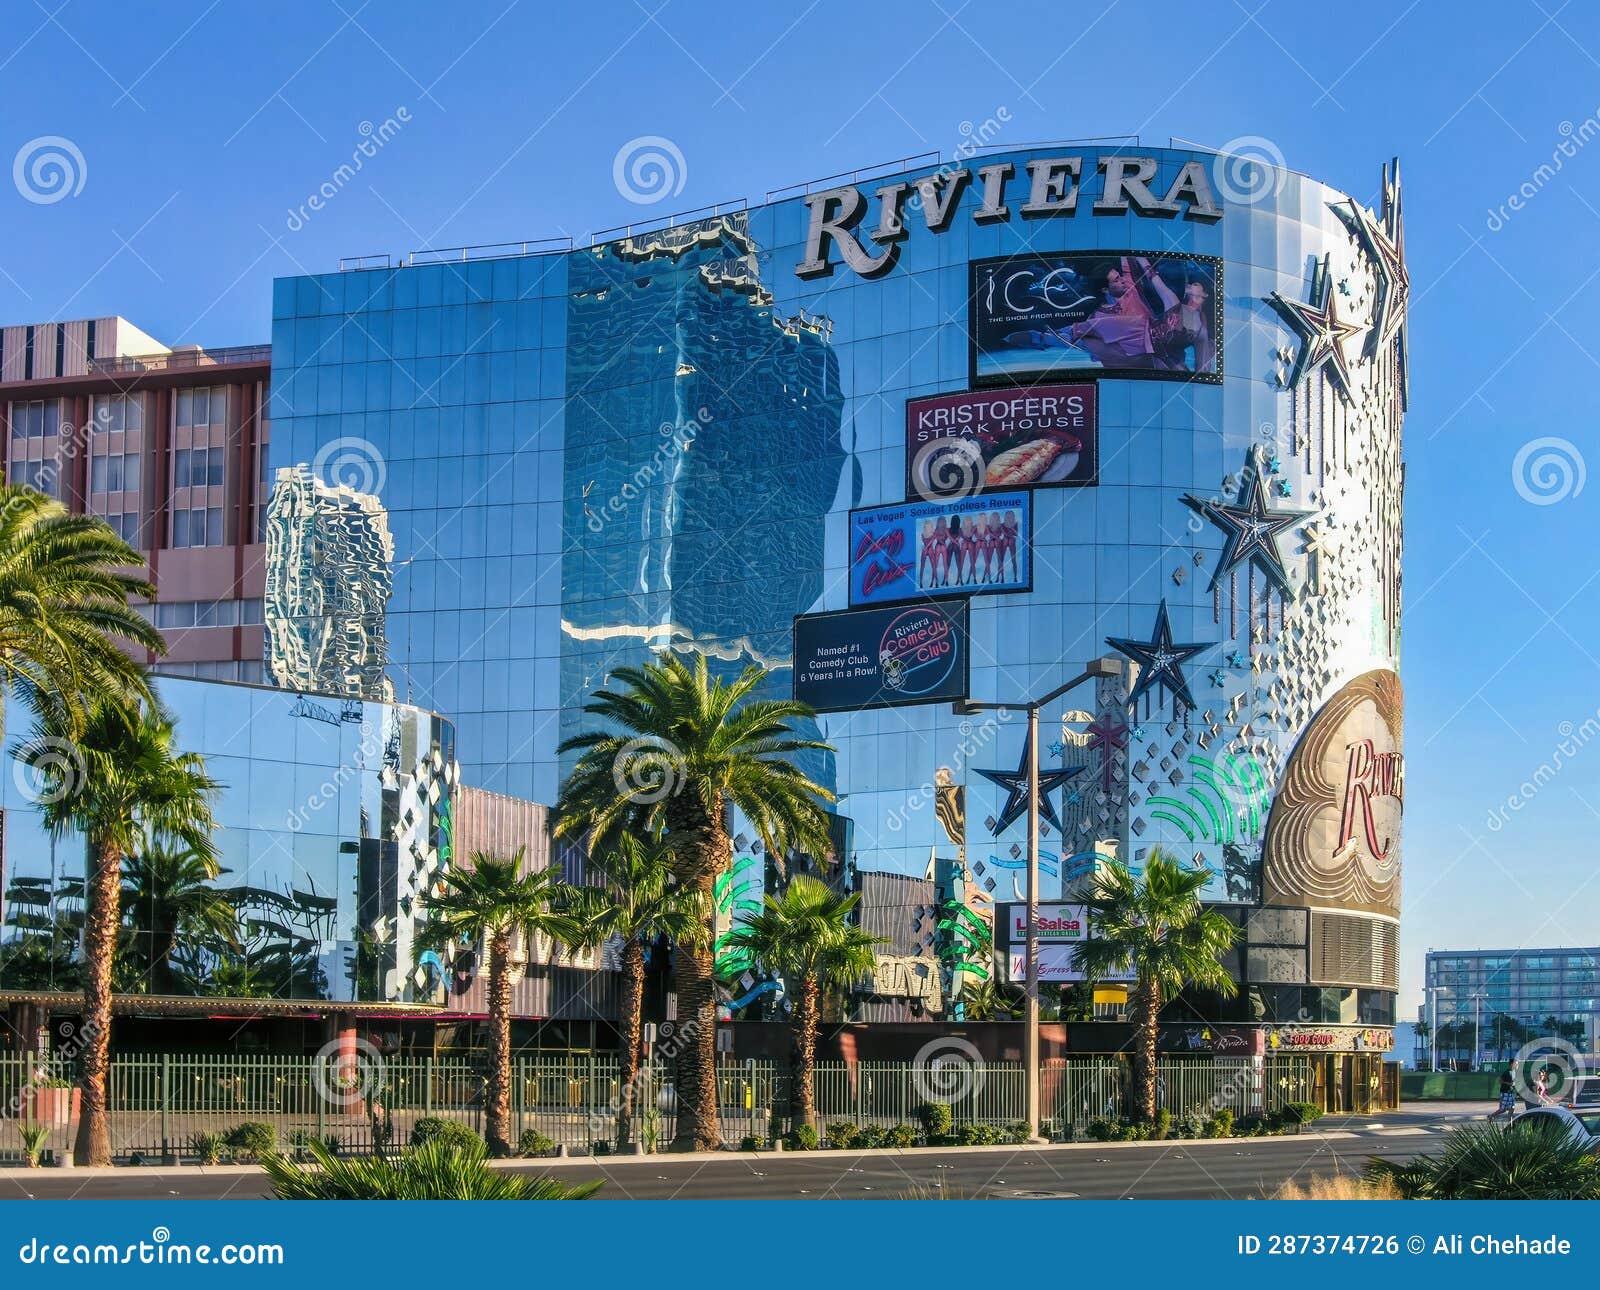 Riviera Vegas Stock Photos - Free & Royalty-Free Stock Photos from